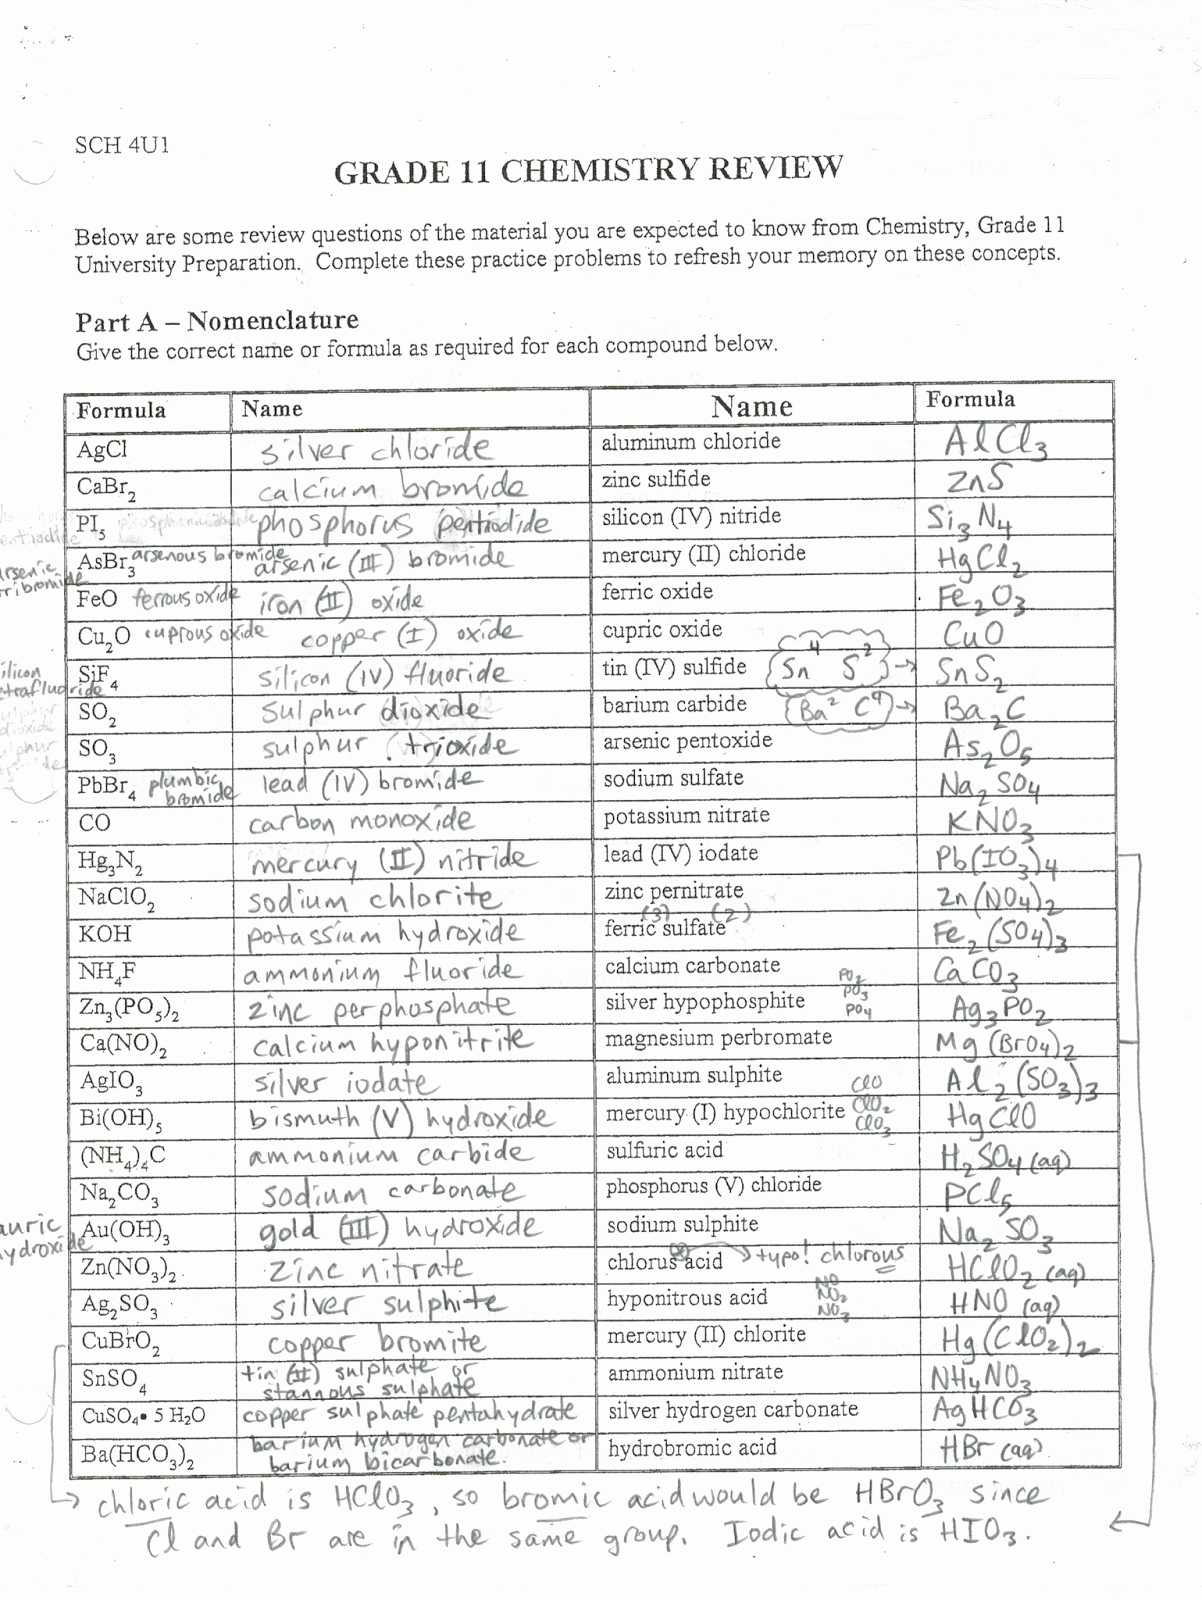 Naming Polyatomic Ions Worksheet as Well as Names and formulas Pounds Worksheet Lovely Naming Chemical